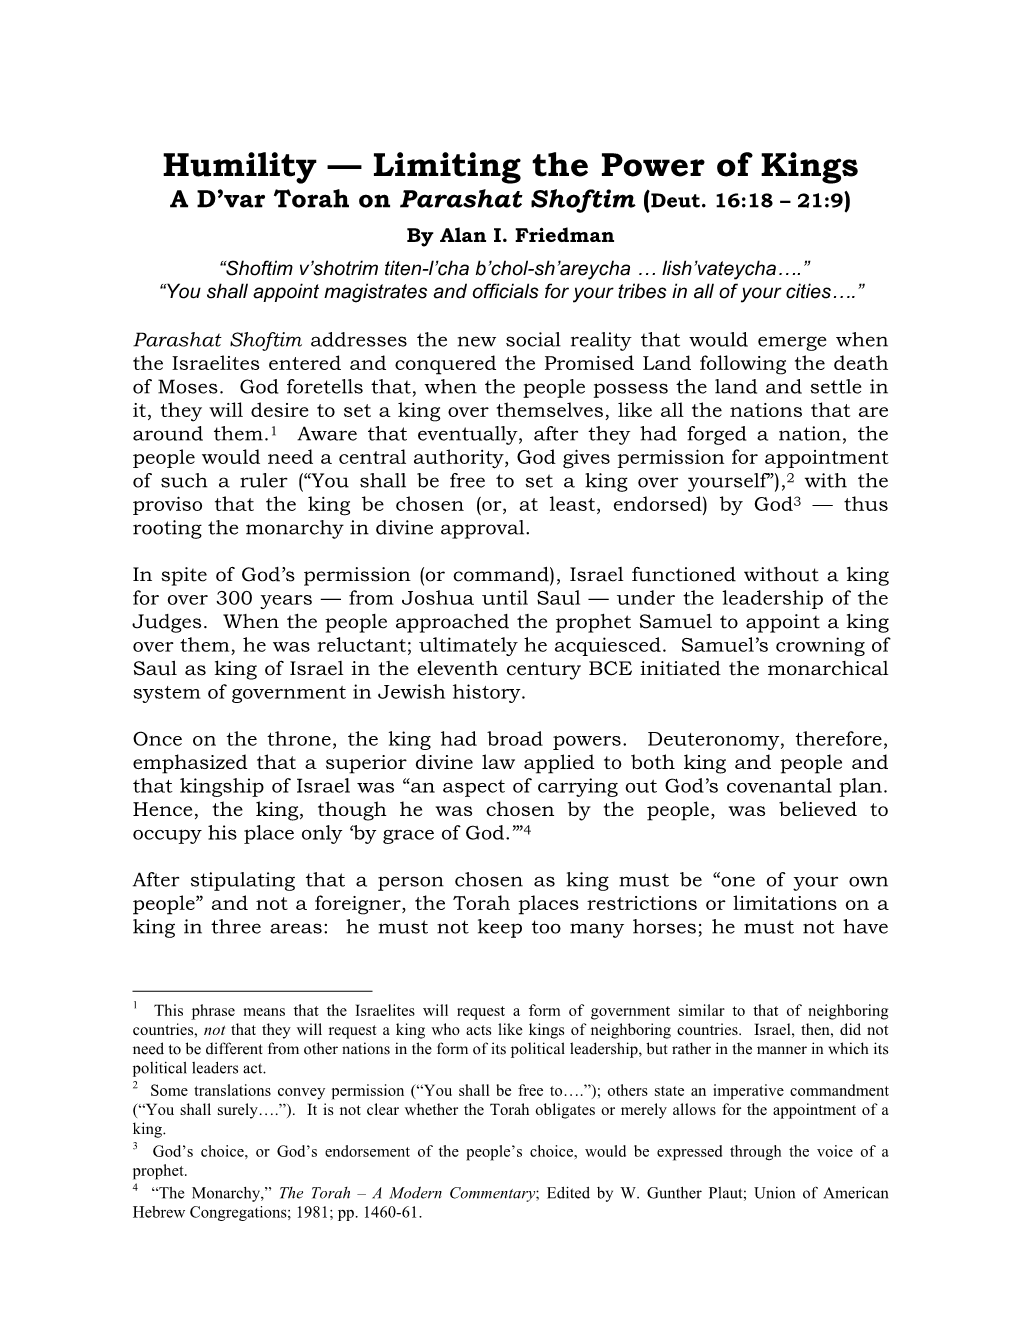 Humility — Limiting the Power of Kings a D’Var Torah on Parashat Shoftim (Deut